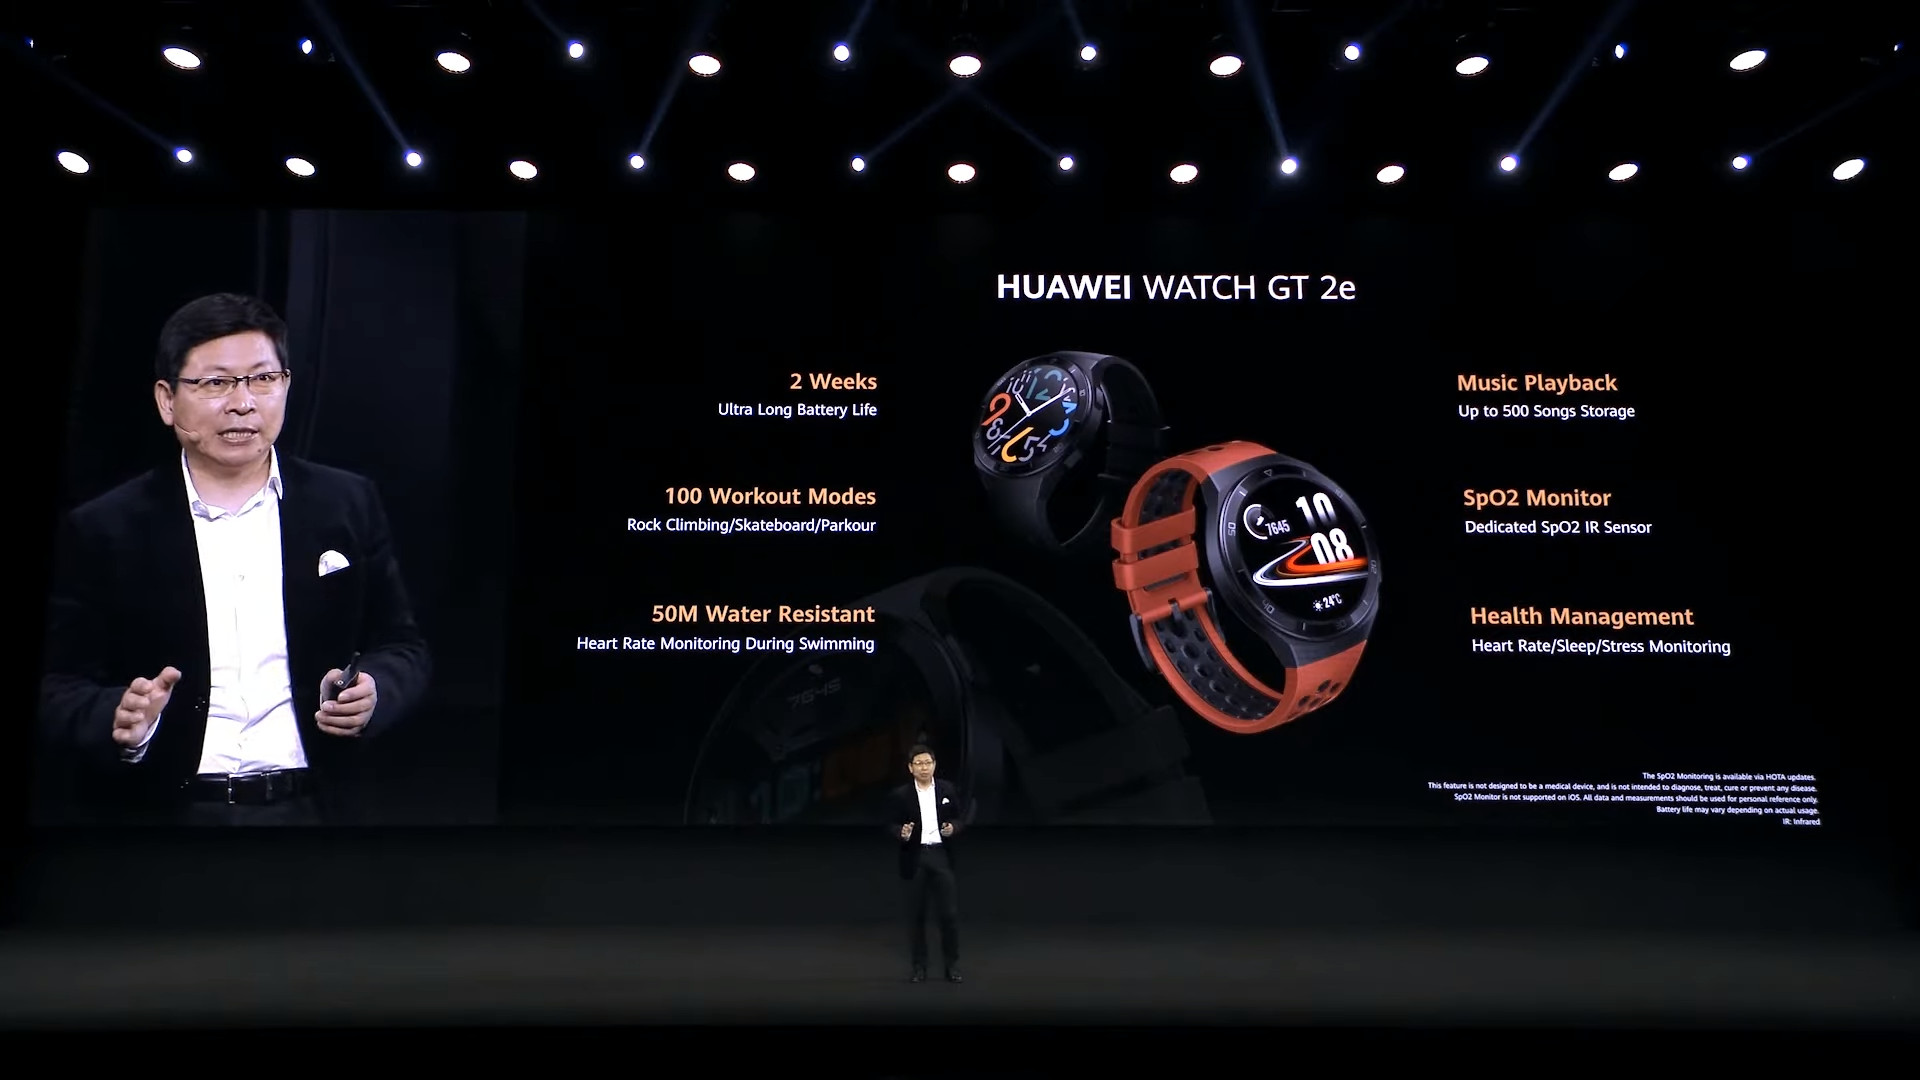 Huawei Watch GT 2e announcement